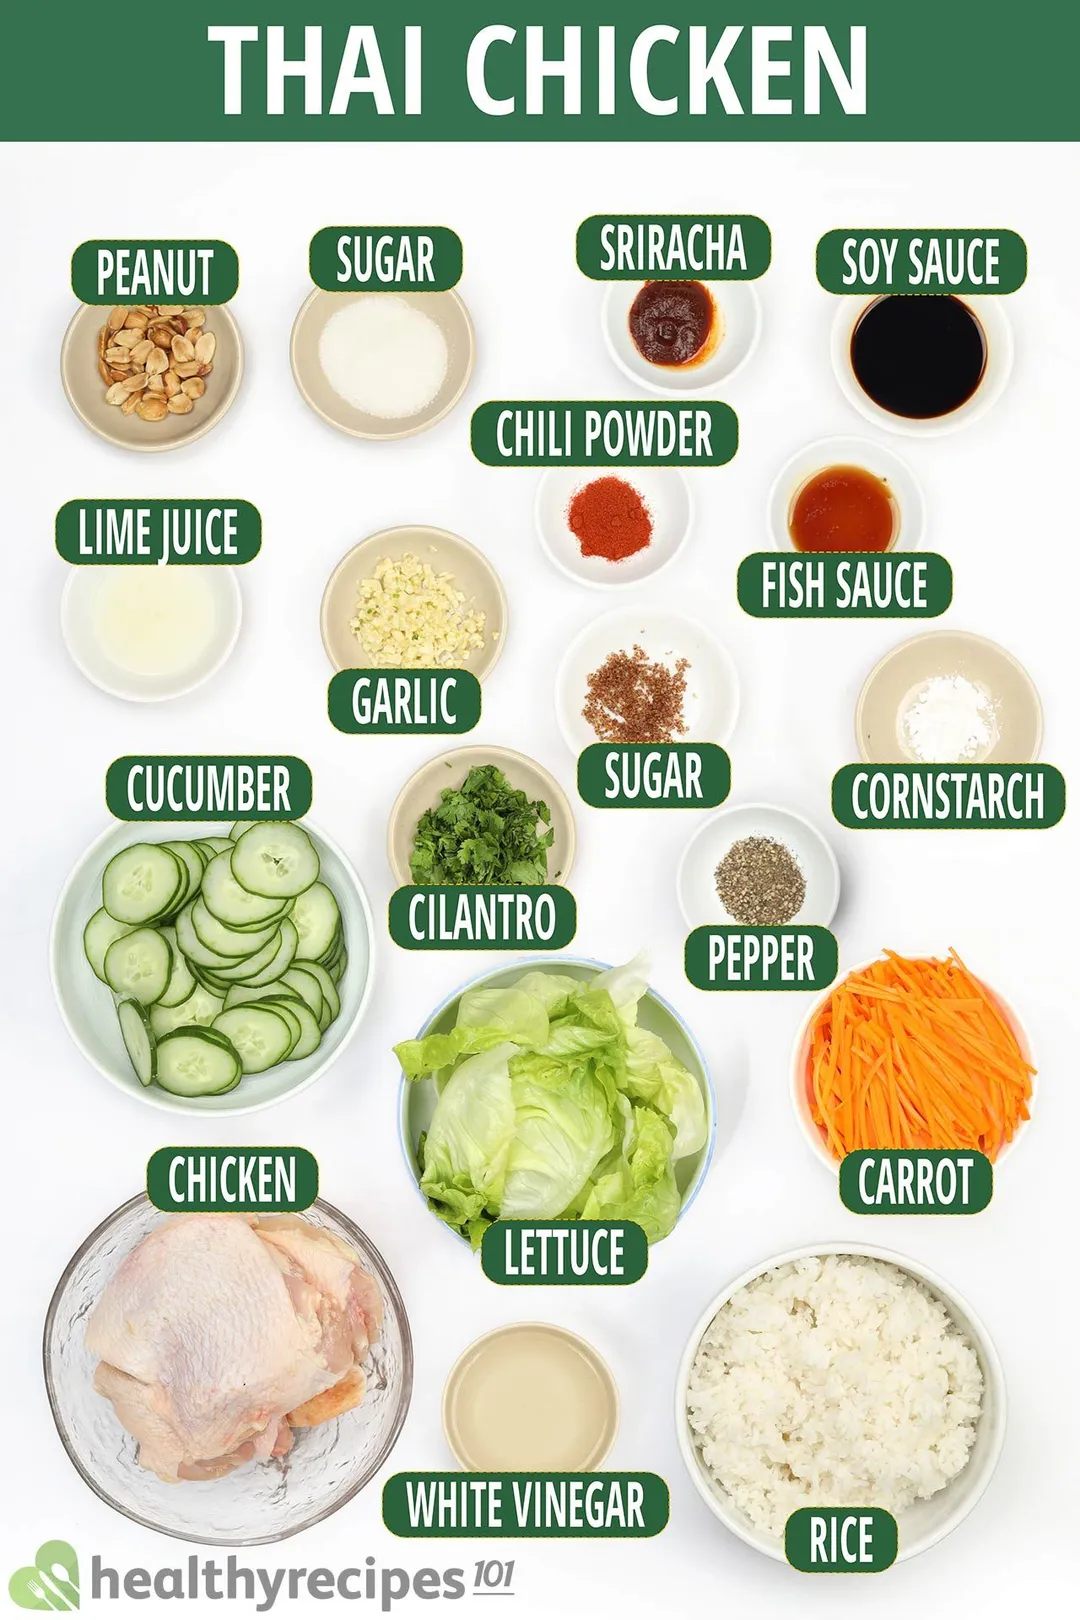 Ingredients for Thai chicken: chicken thighs, white rice, vegetables, seasonings, and garnish